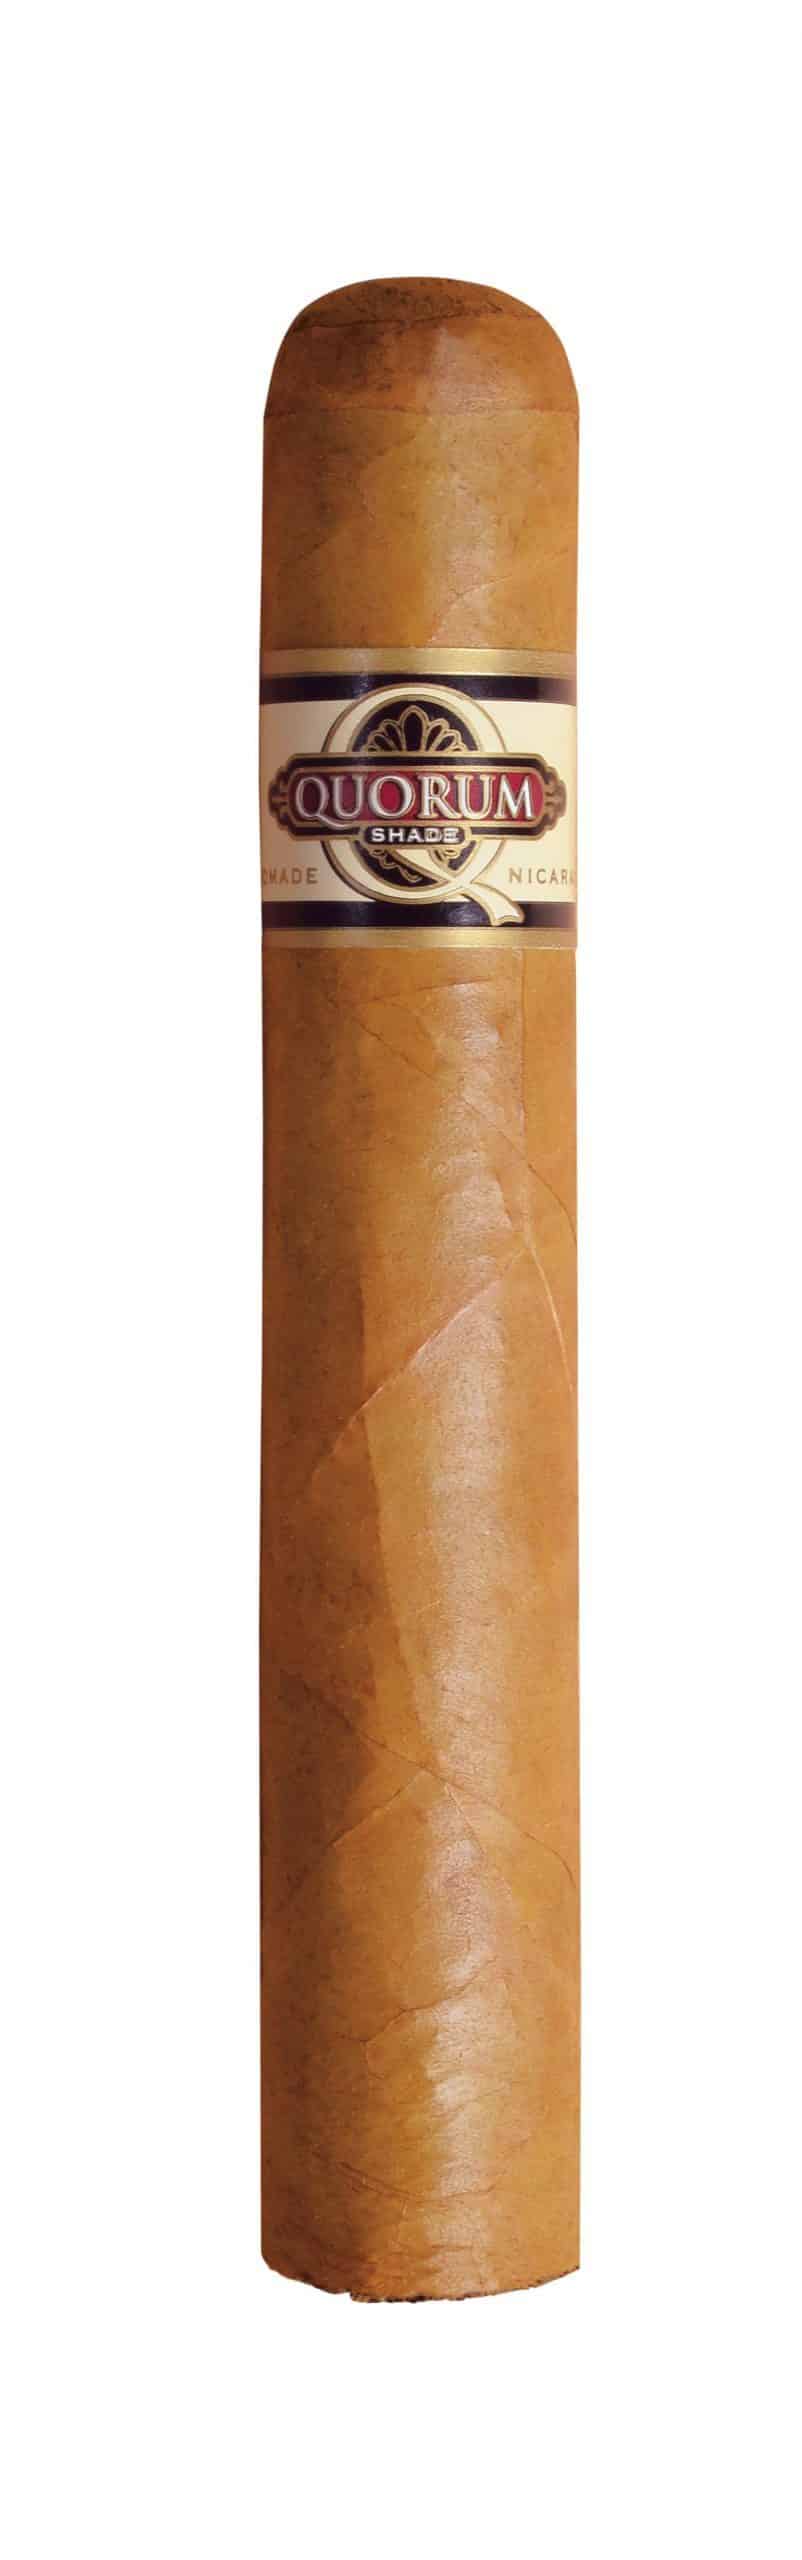 wuorum shade double gordo single cigar